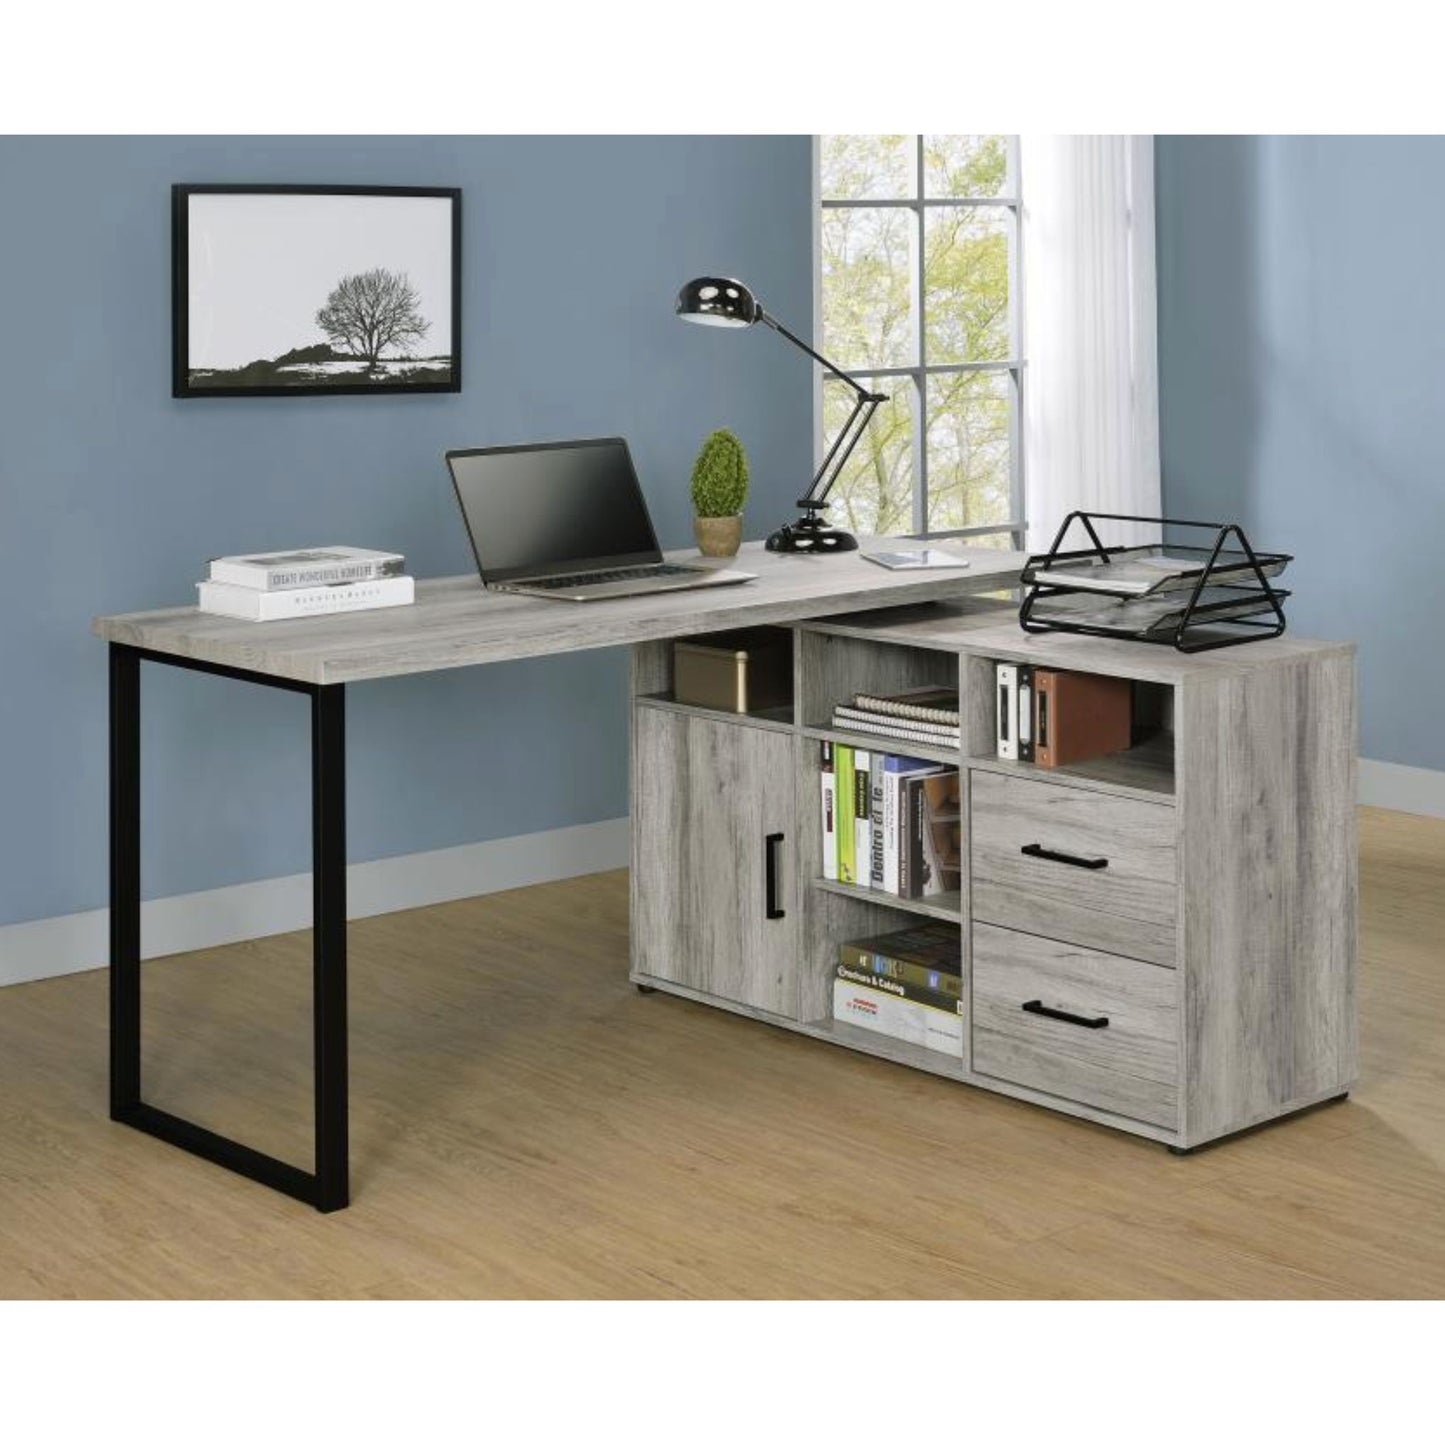 HERTFORD L-shape Office Desk with Storage Grey